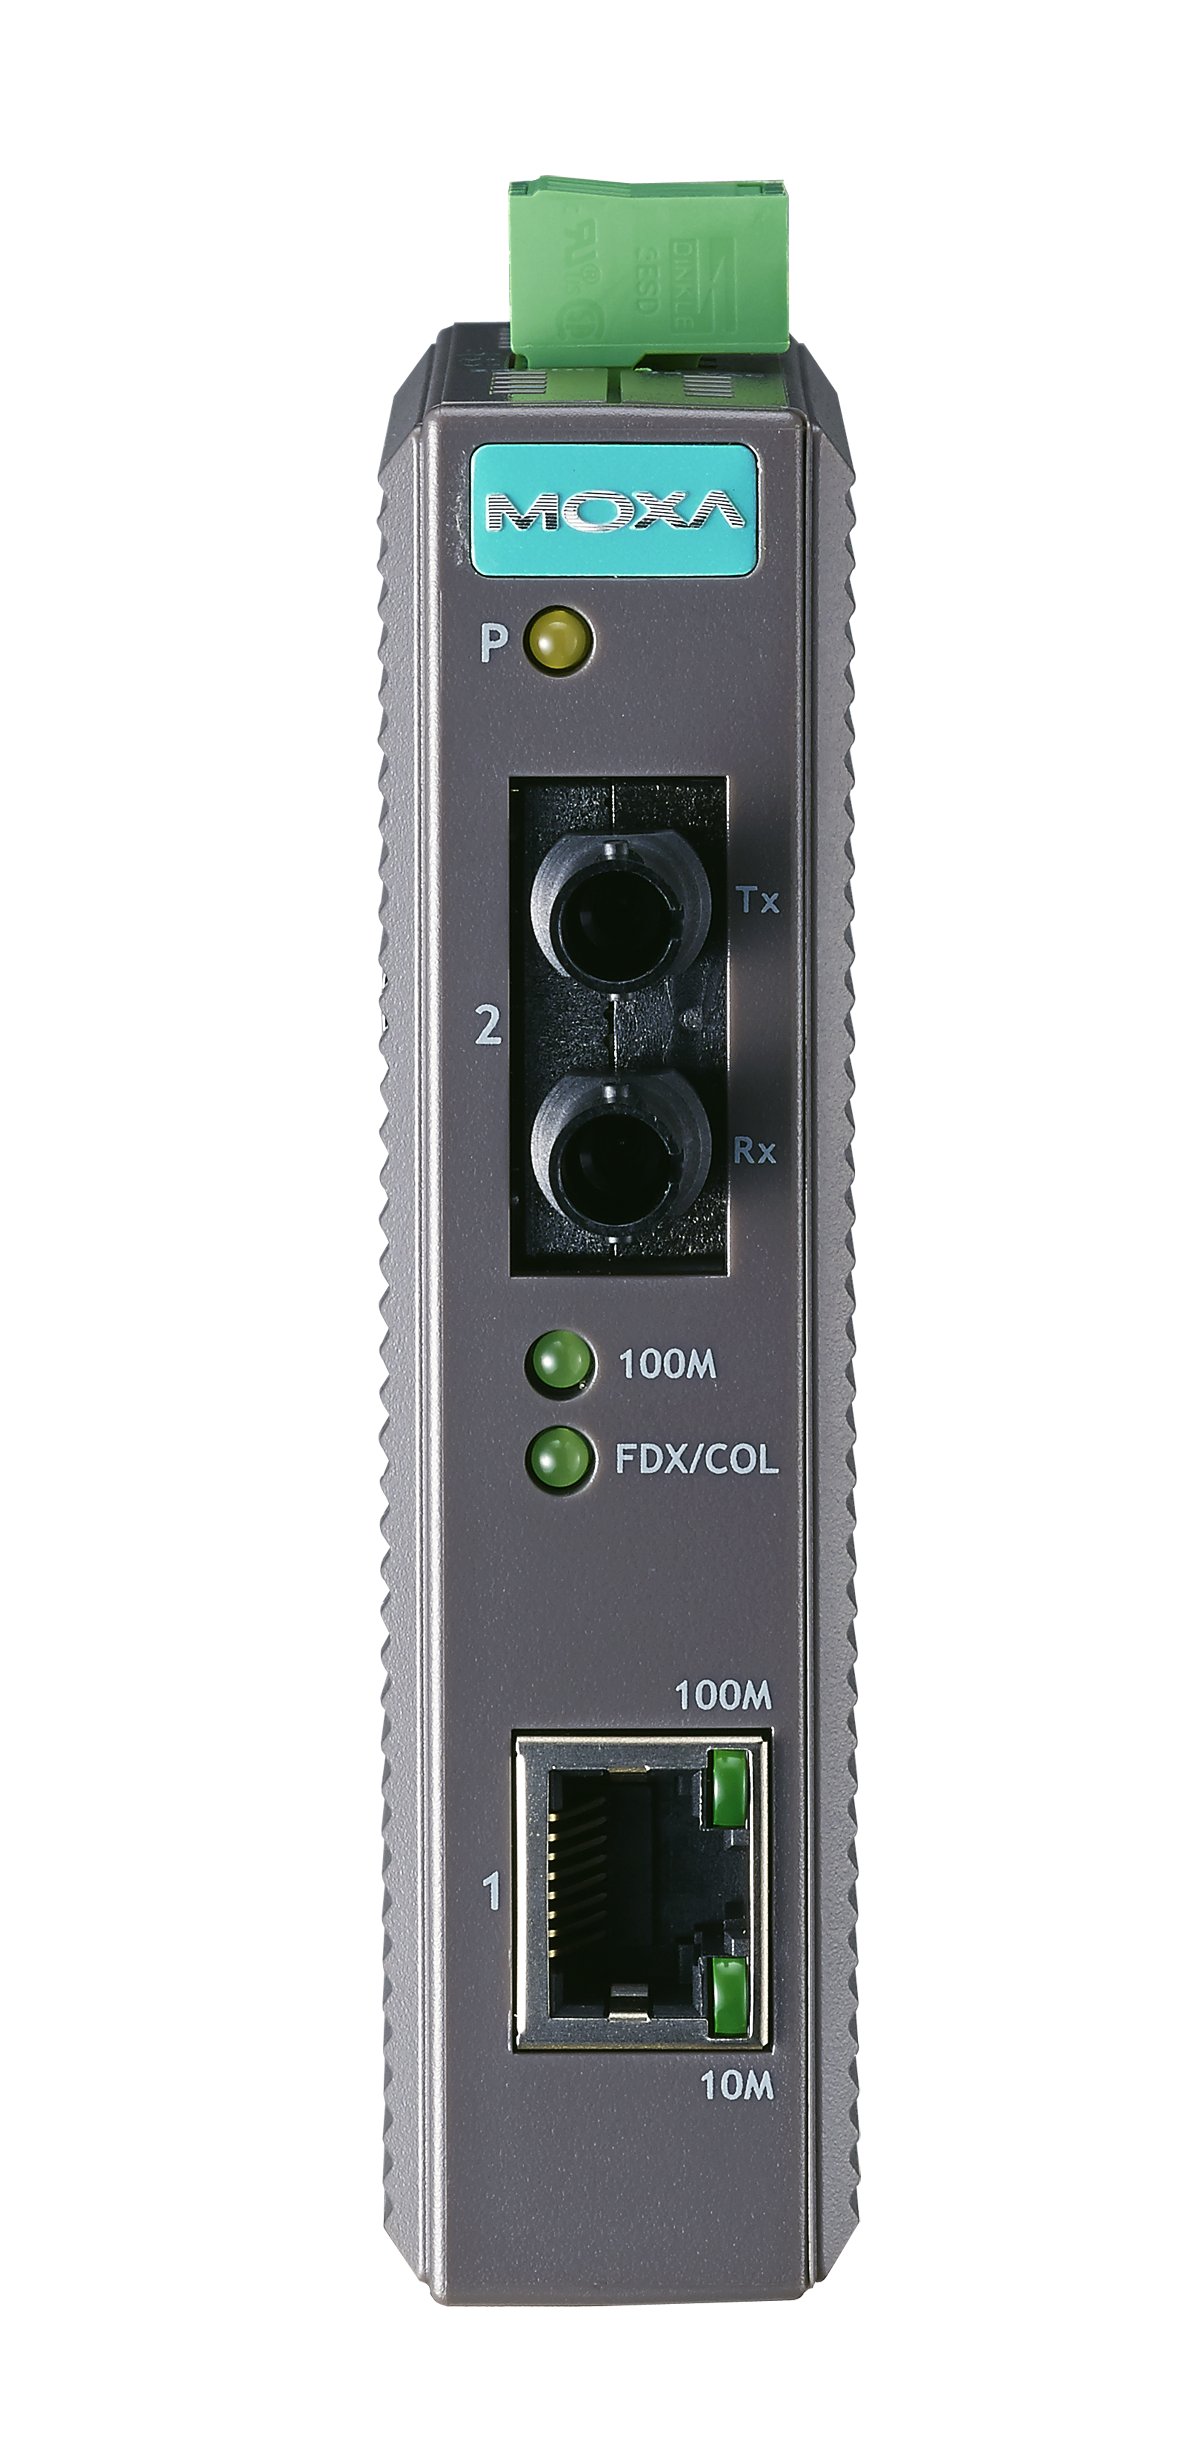 Moxa imc 21 s sc. Медиаконвертер Moxa IMC-21a-s-SC. Медиаконвертер IMC-21-M-SC. Медиаконвертер IMC-21-S-SC Ethernet 10/100basetx в 100basefx (одномодовое оптоволокно).